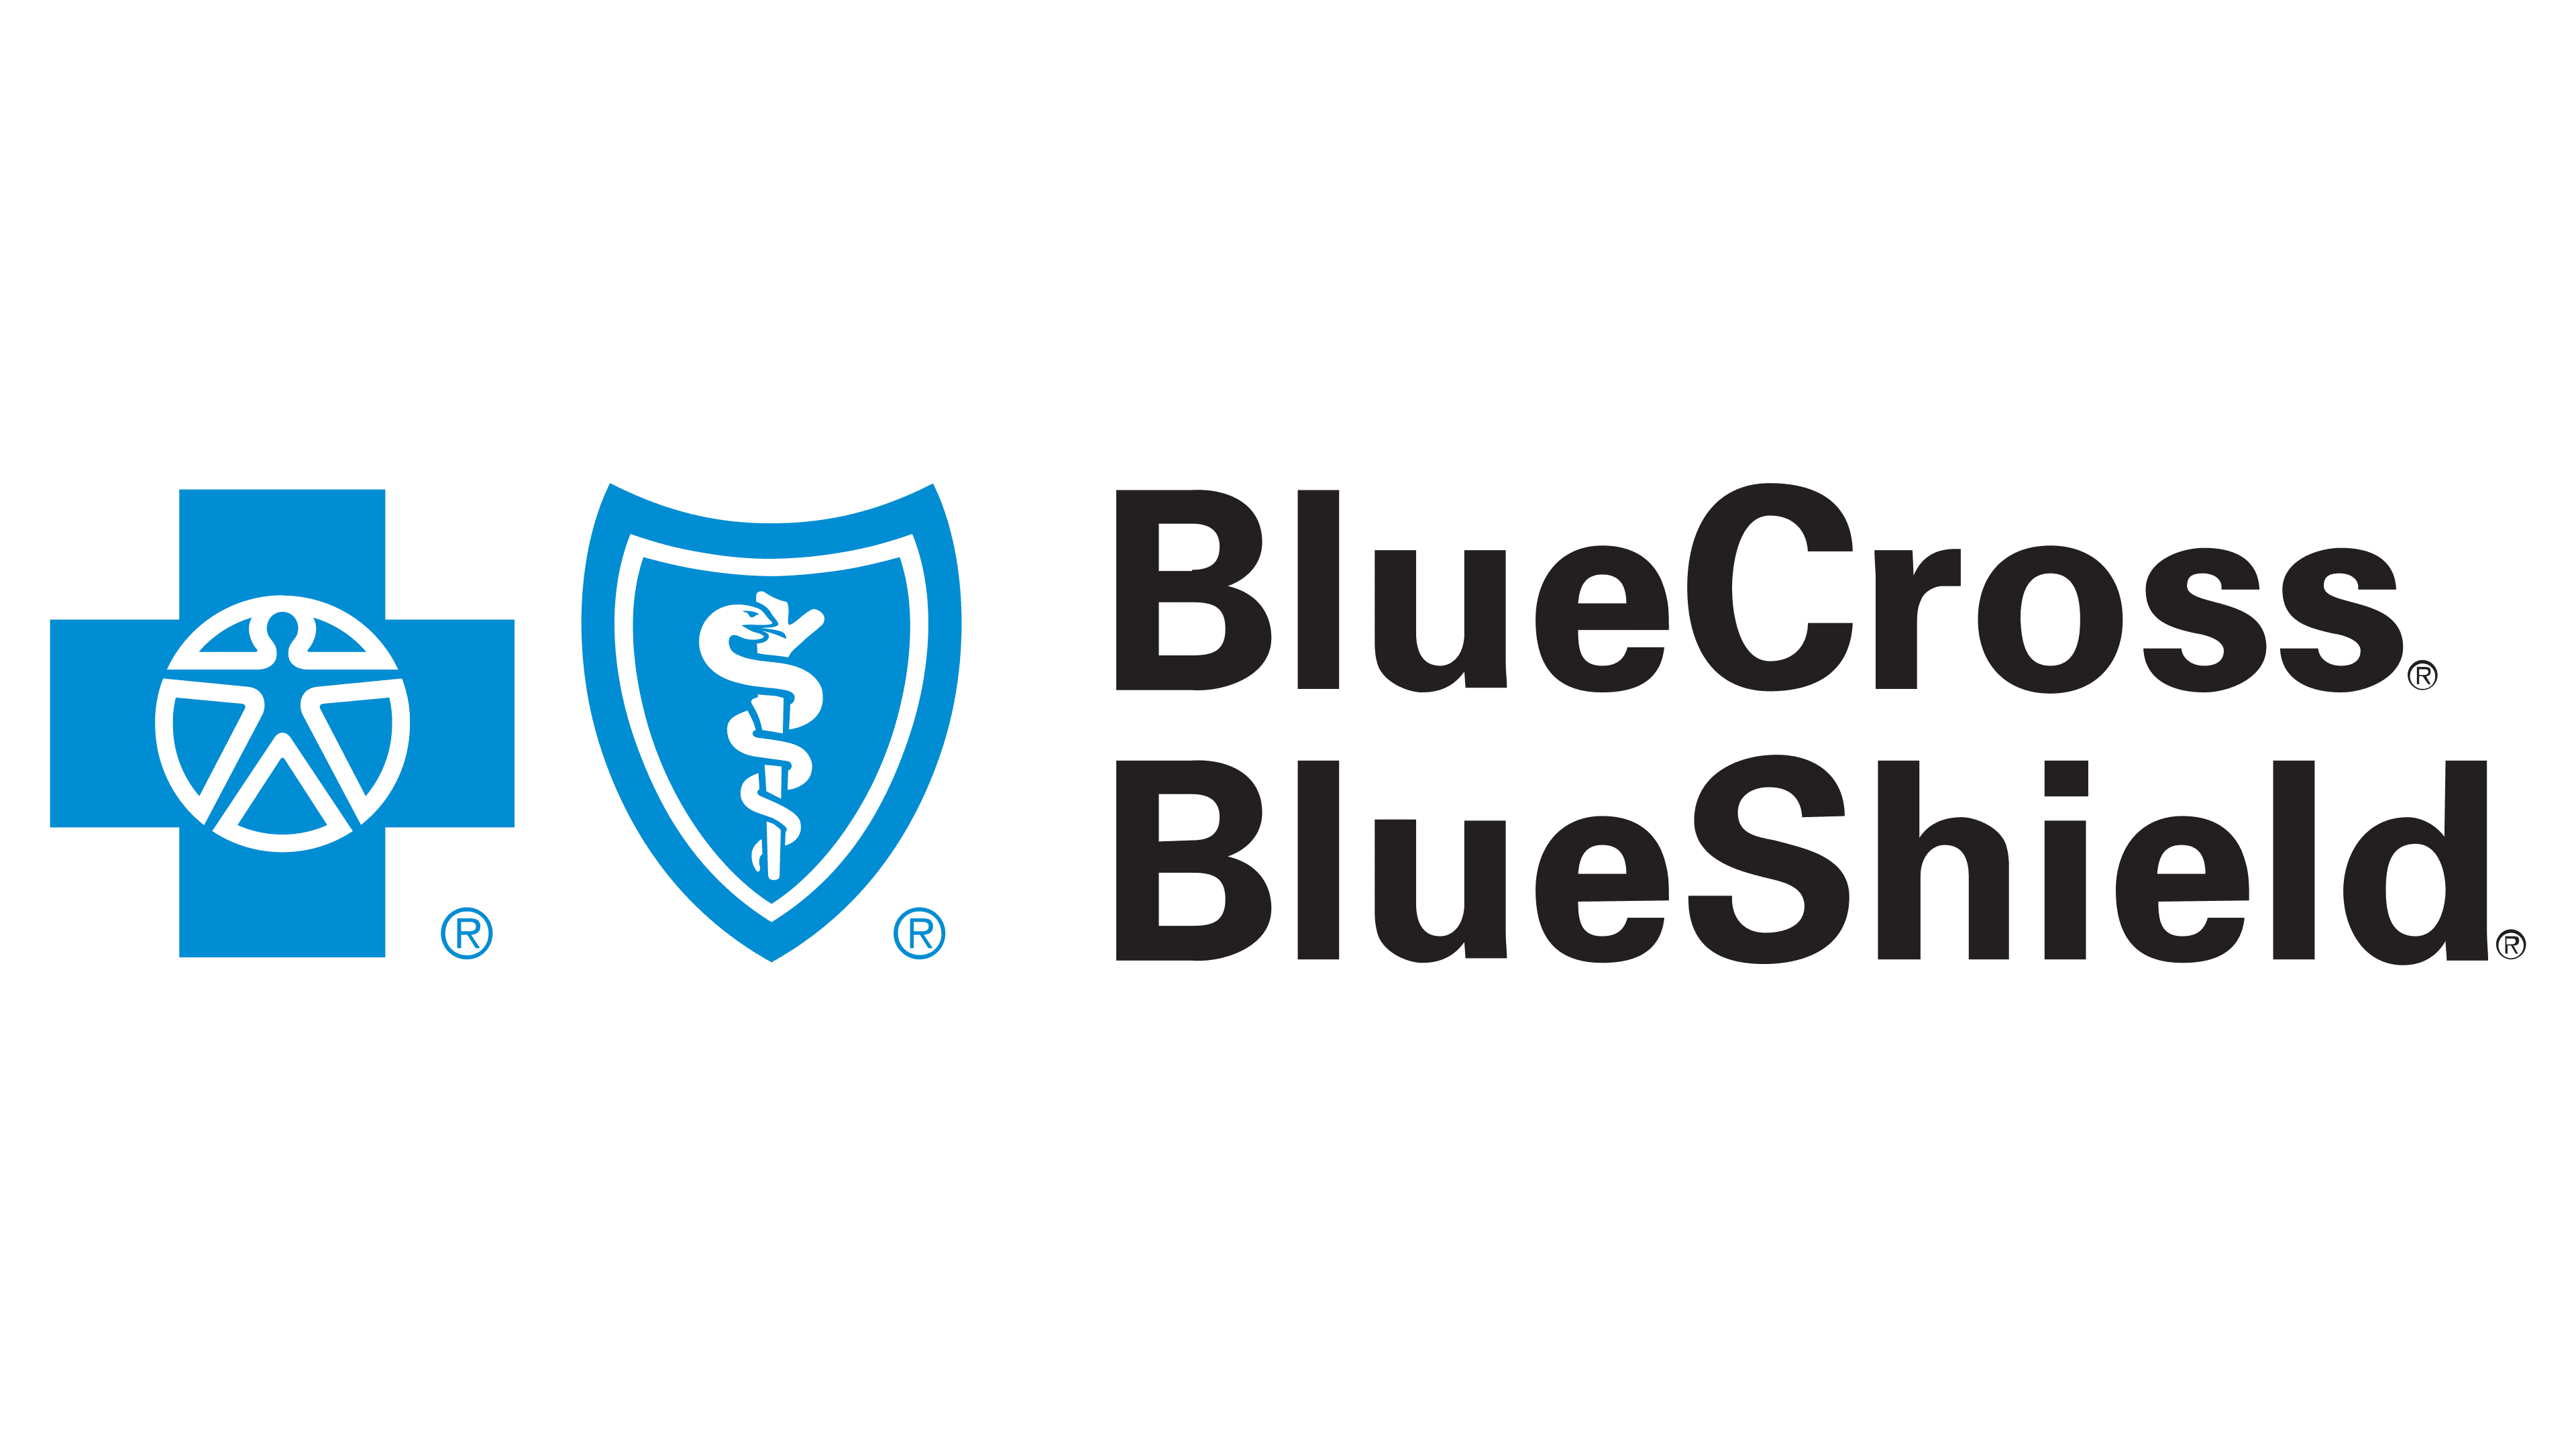 BlueCross BlueShield (logo)